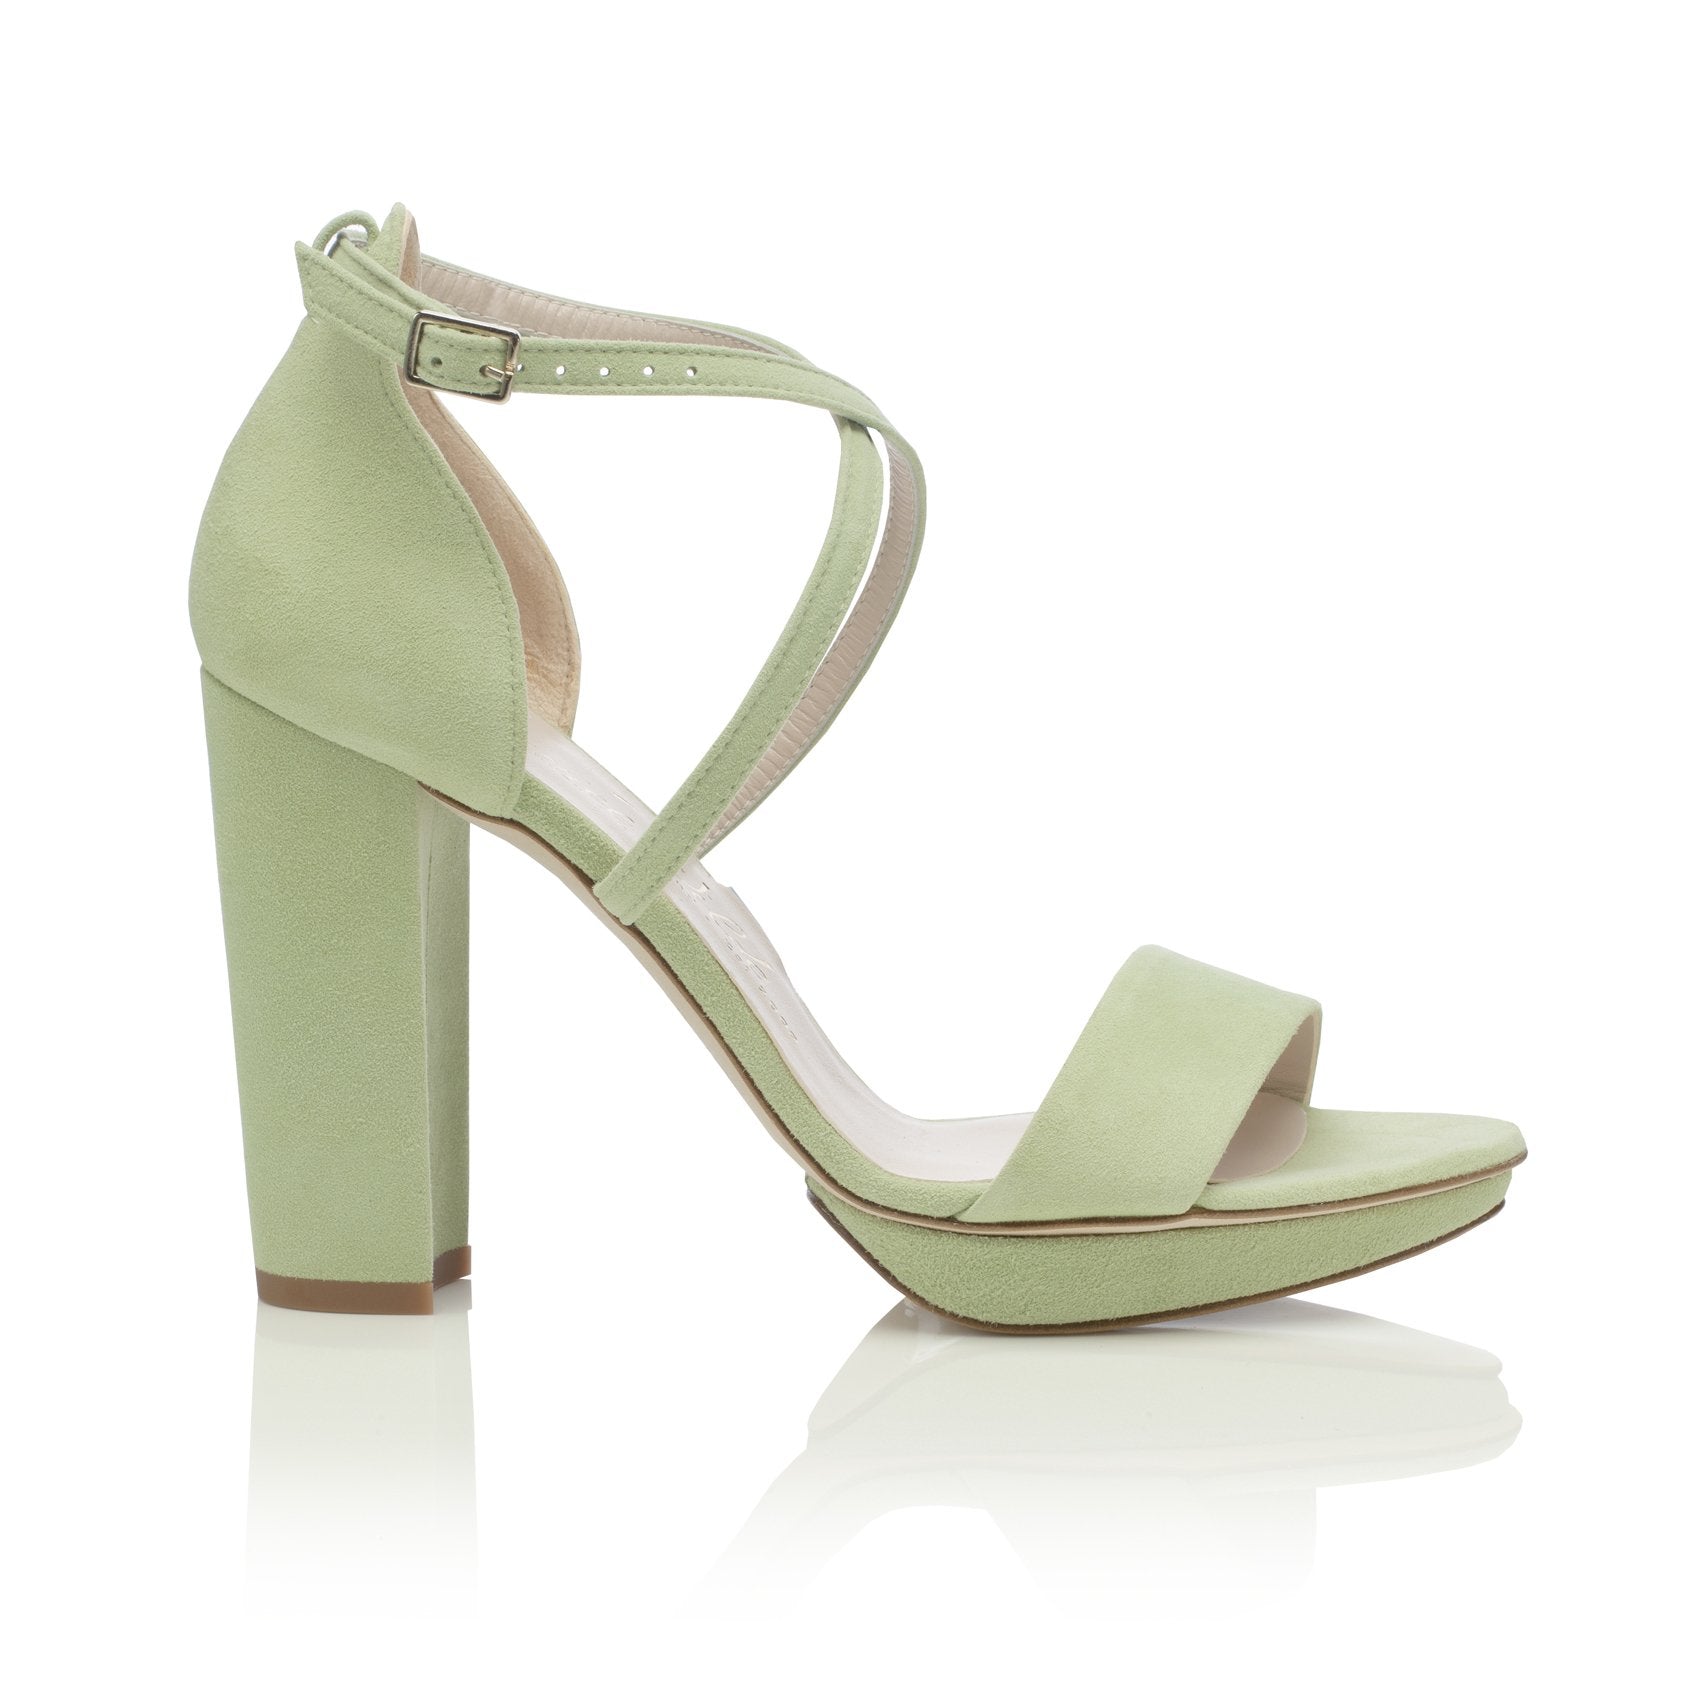 Bespoke Bridal Sandals - Block Heel Bridal Sandals with a platform by ...